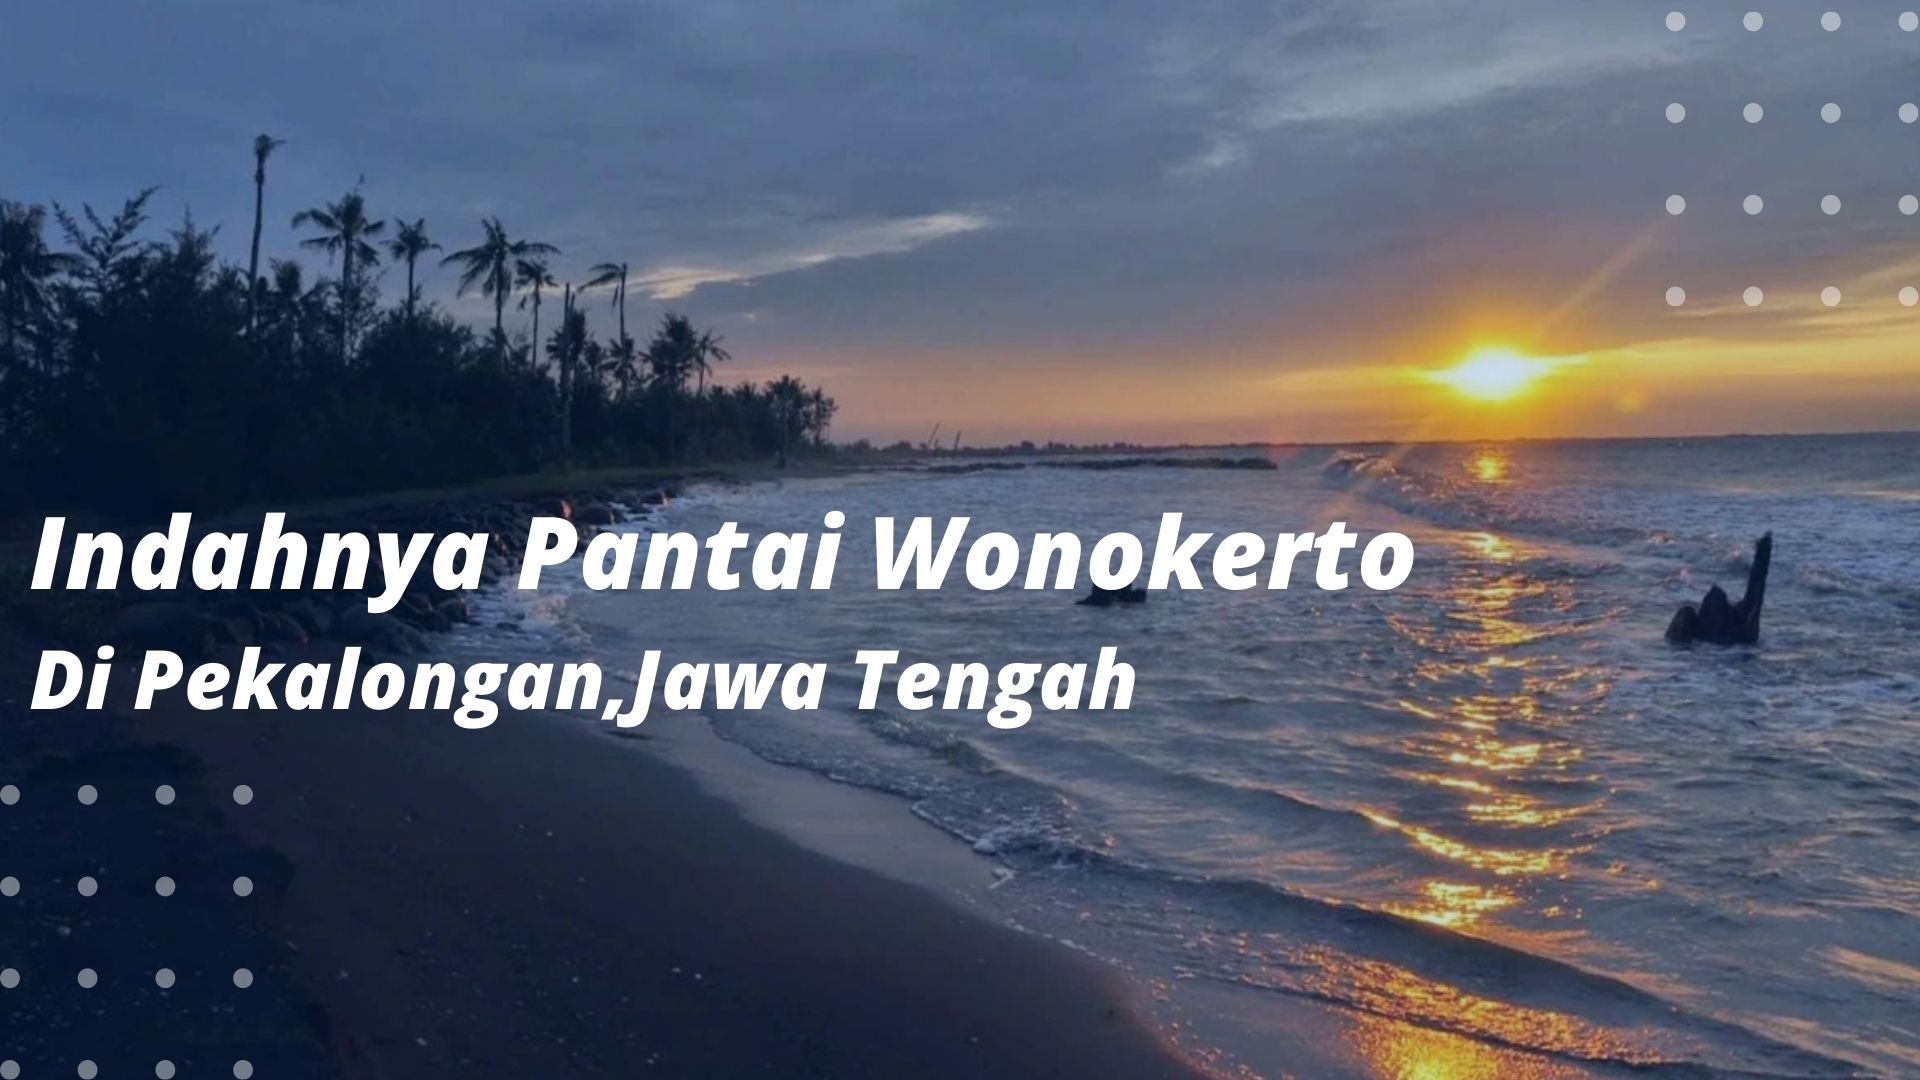 You are currently viewing Indahnya Pantai Wonokerto Di Pekalongan,Jawa Tengah